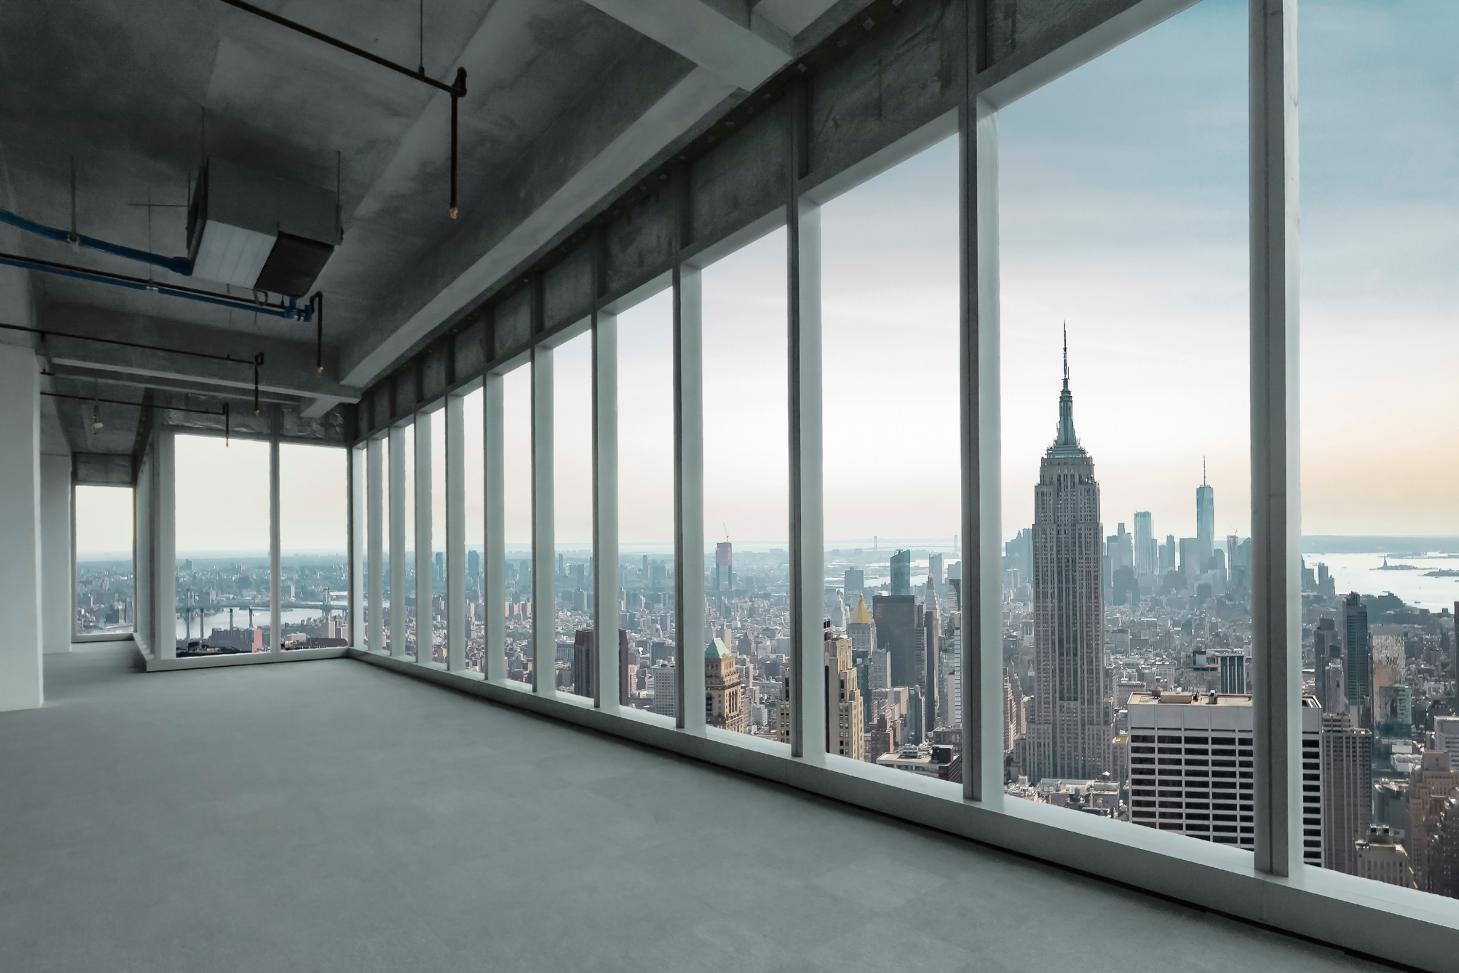 New York skyline seen through a vacant office window